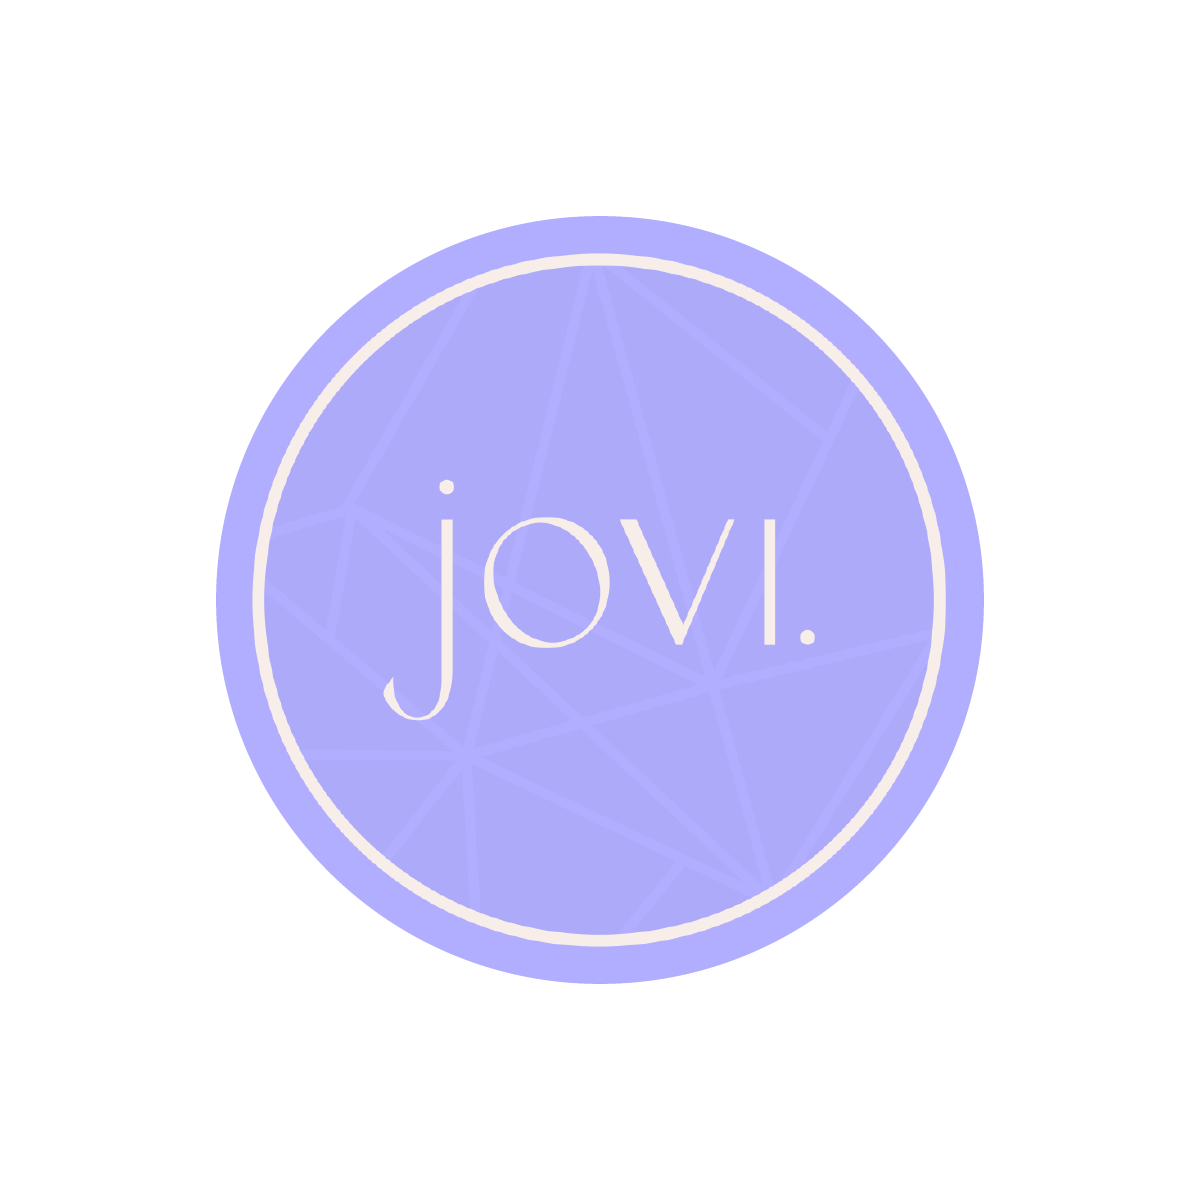 Jovi Circle ***